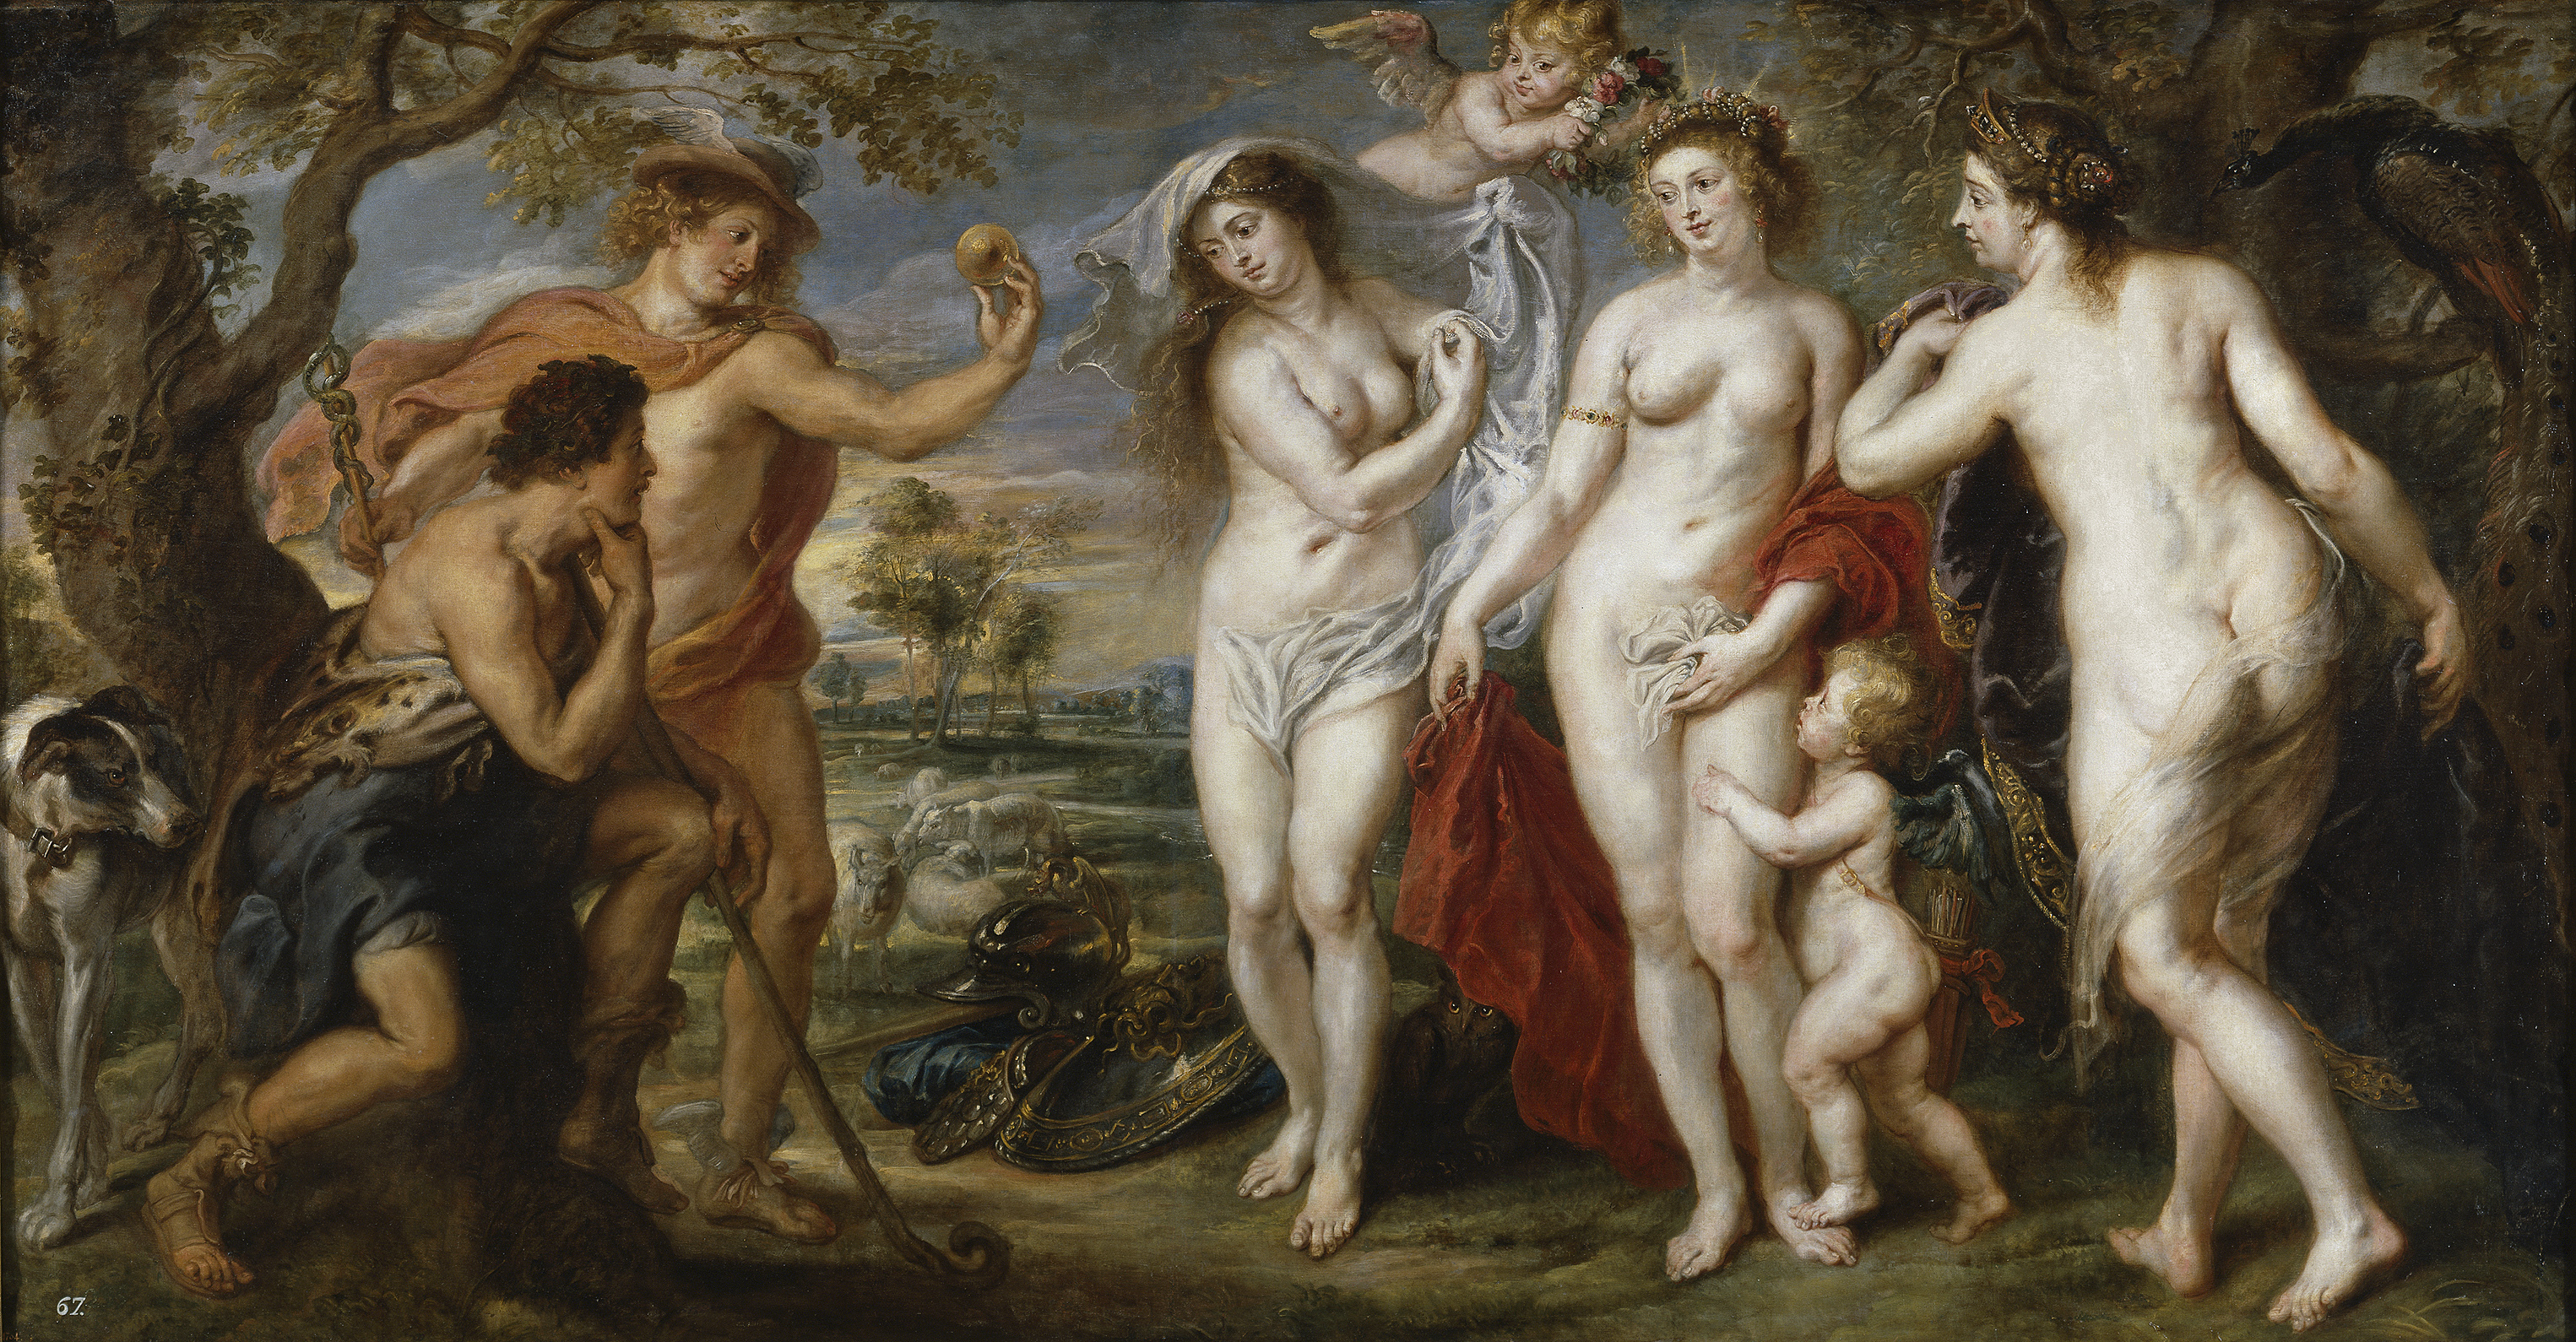 Judgment of Paris by Peter Paul Rubens